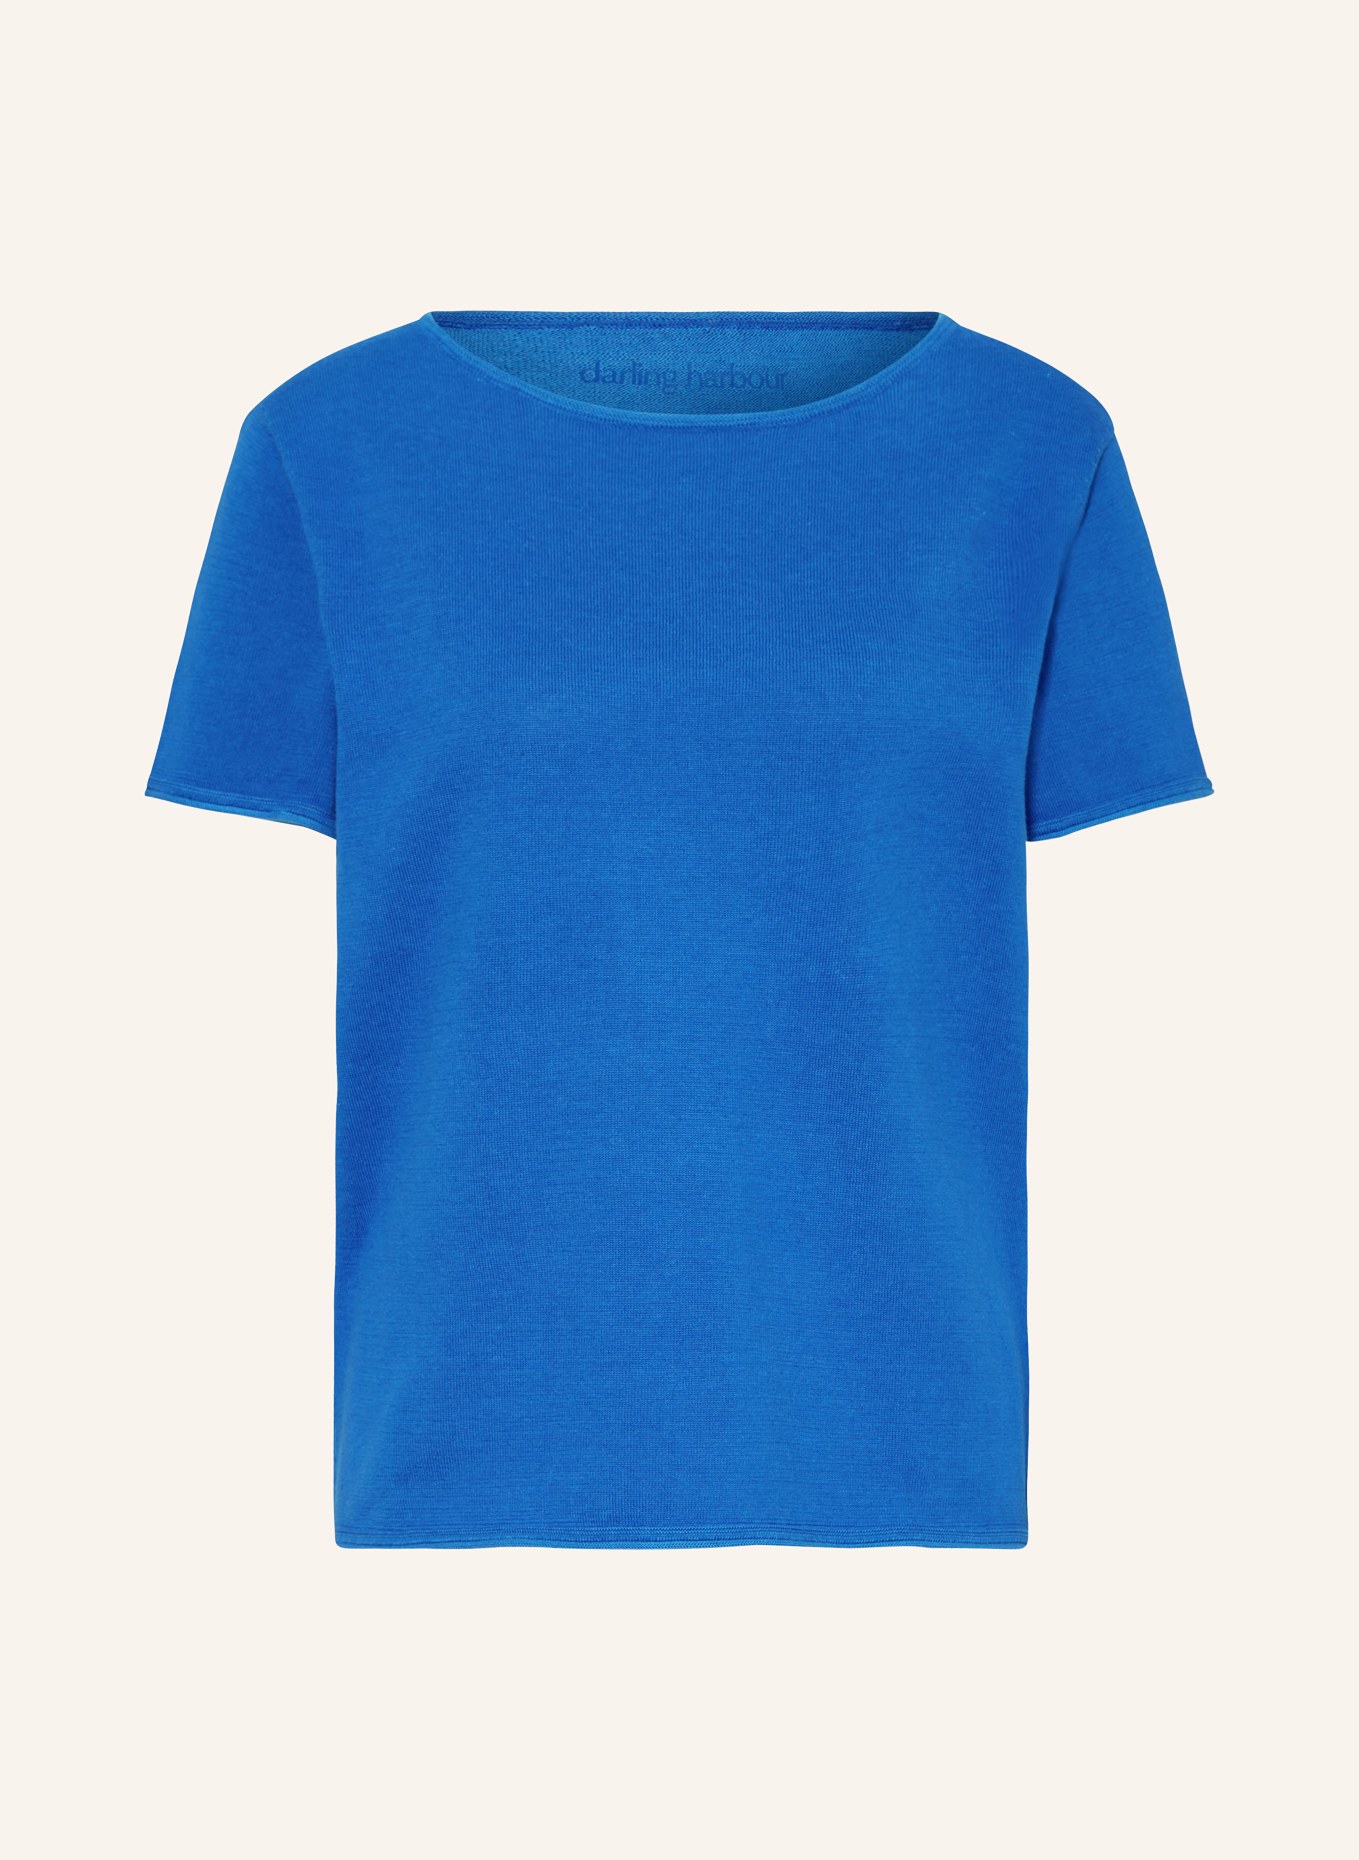 darling harbour Knit shirt, Color: BLAU /AZURBLAU (Image 1)